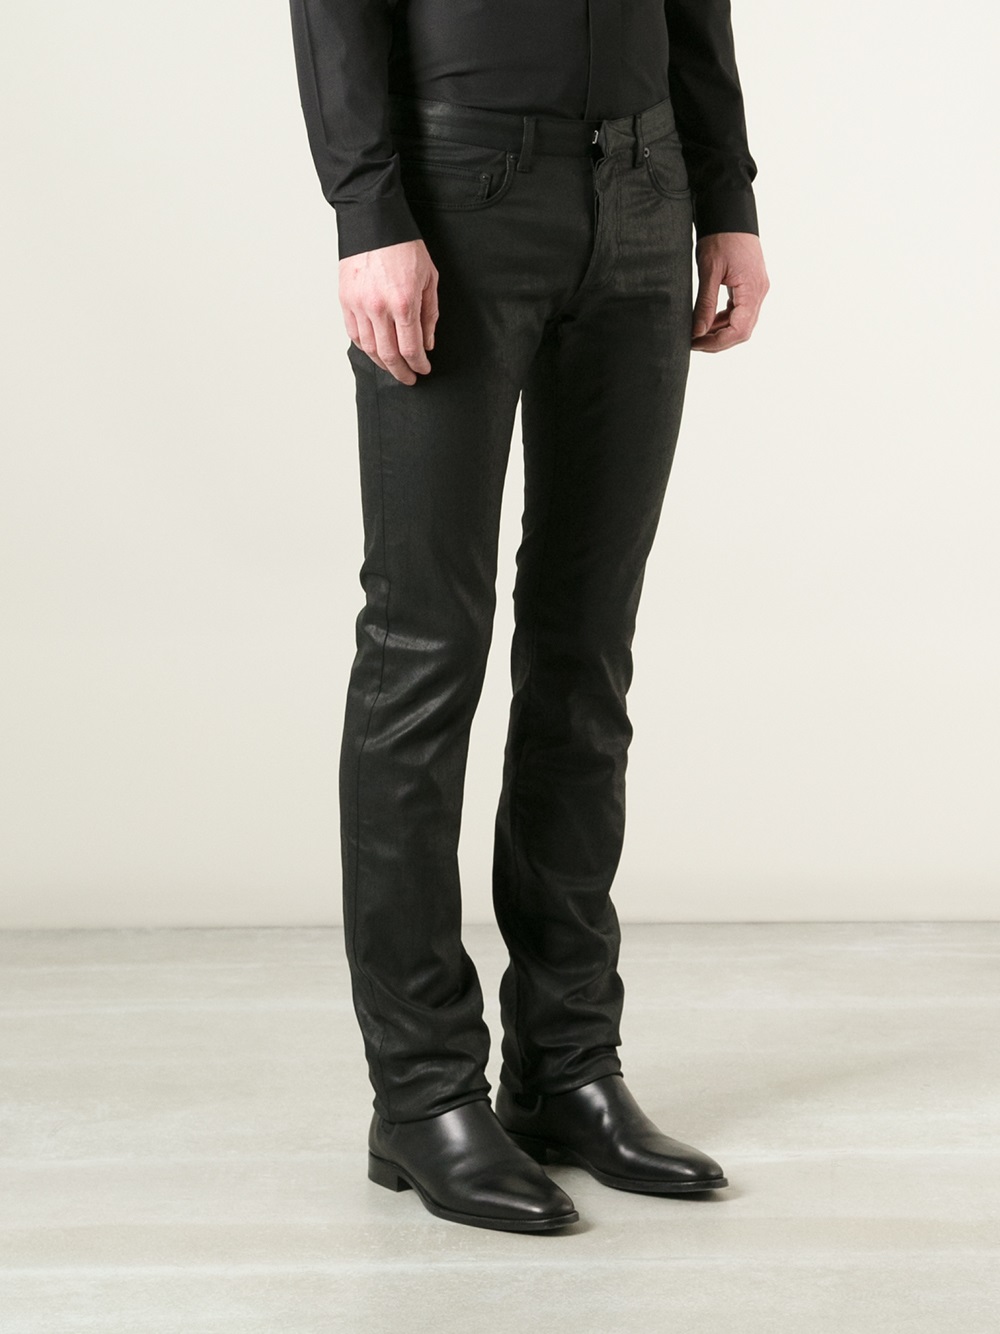 Dior Homme Coated Skinny Jeans in Black for Men | Lyst